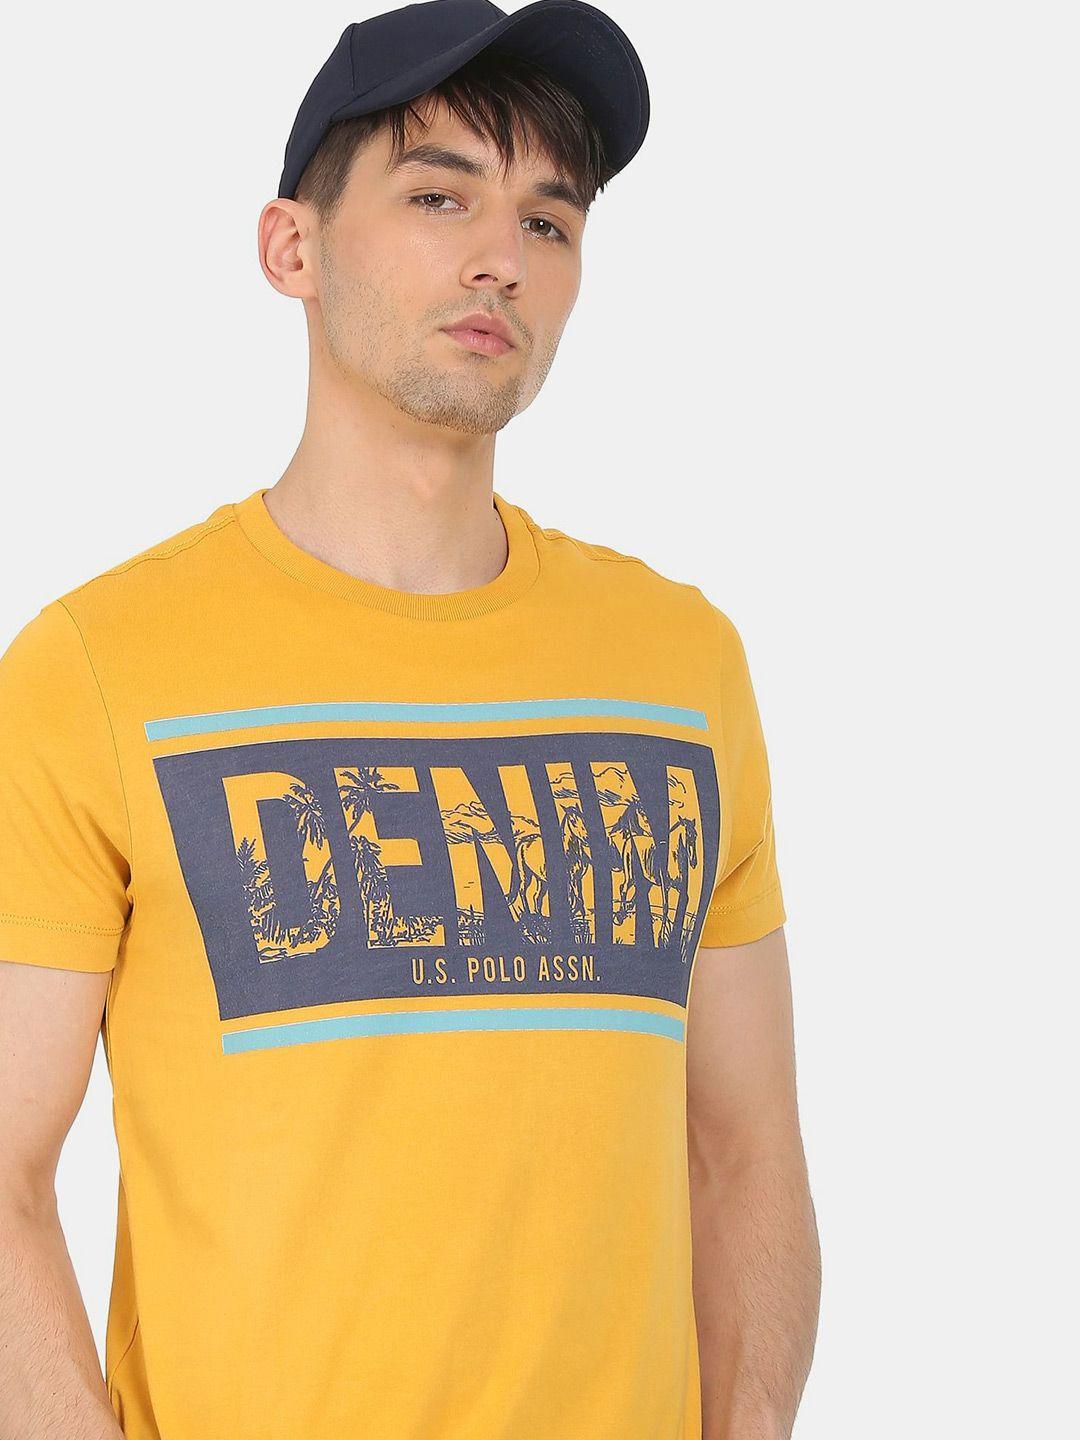 u s polo assn denim co men yellow typography printed pure cotton t-shirt